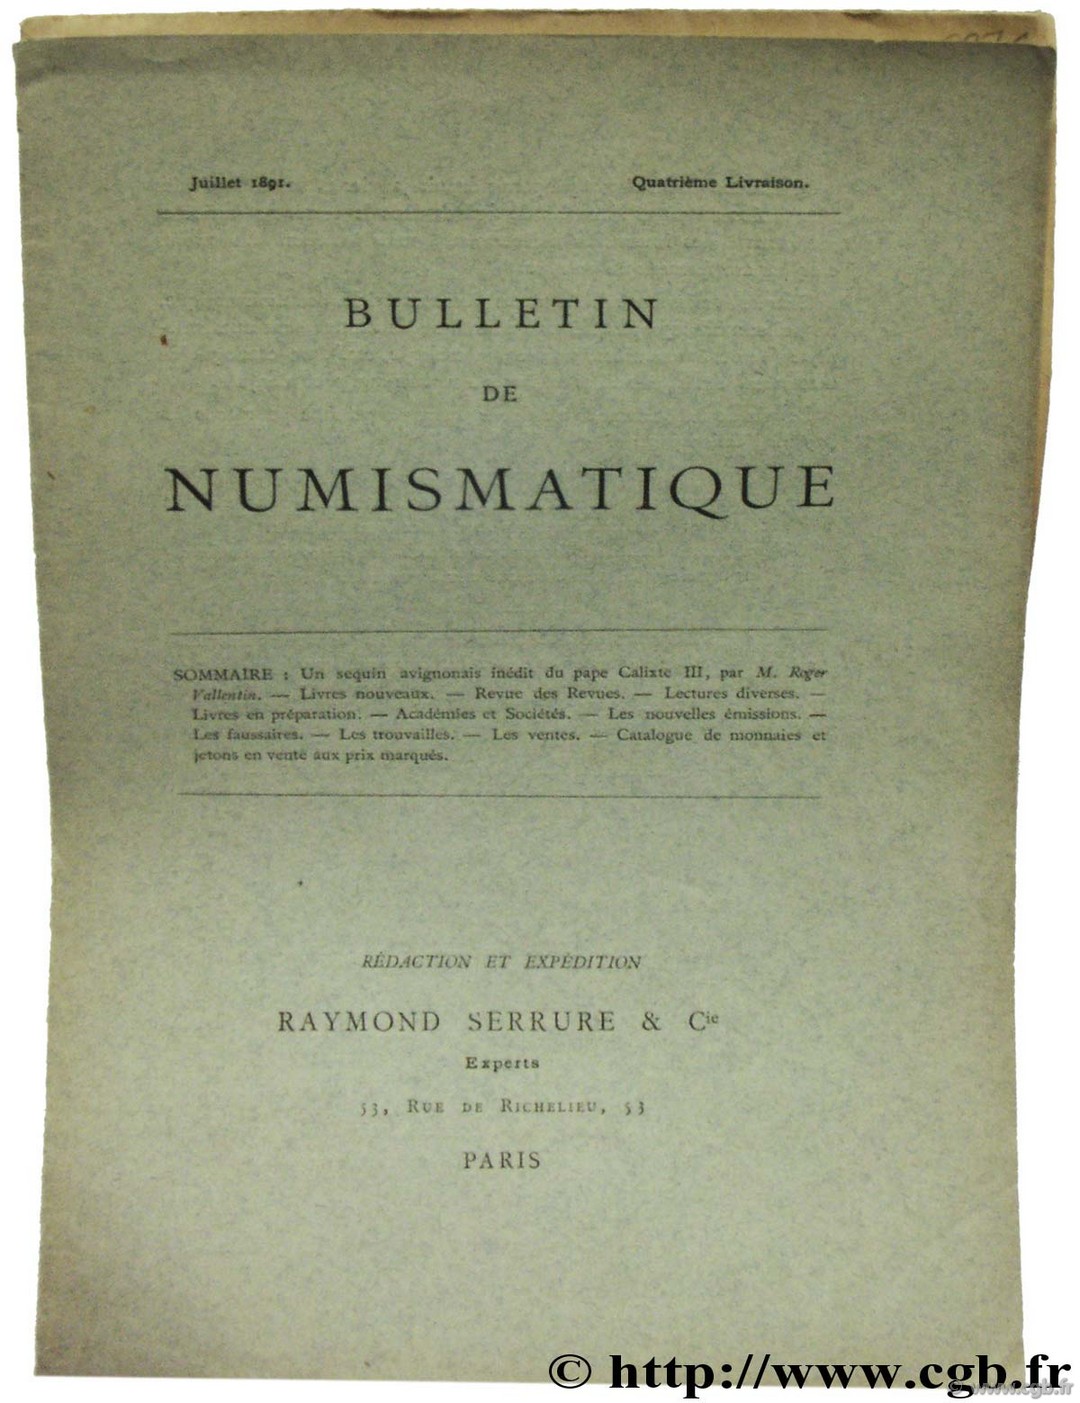 Bulletin de numismatique  SERRURE R.